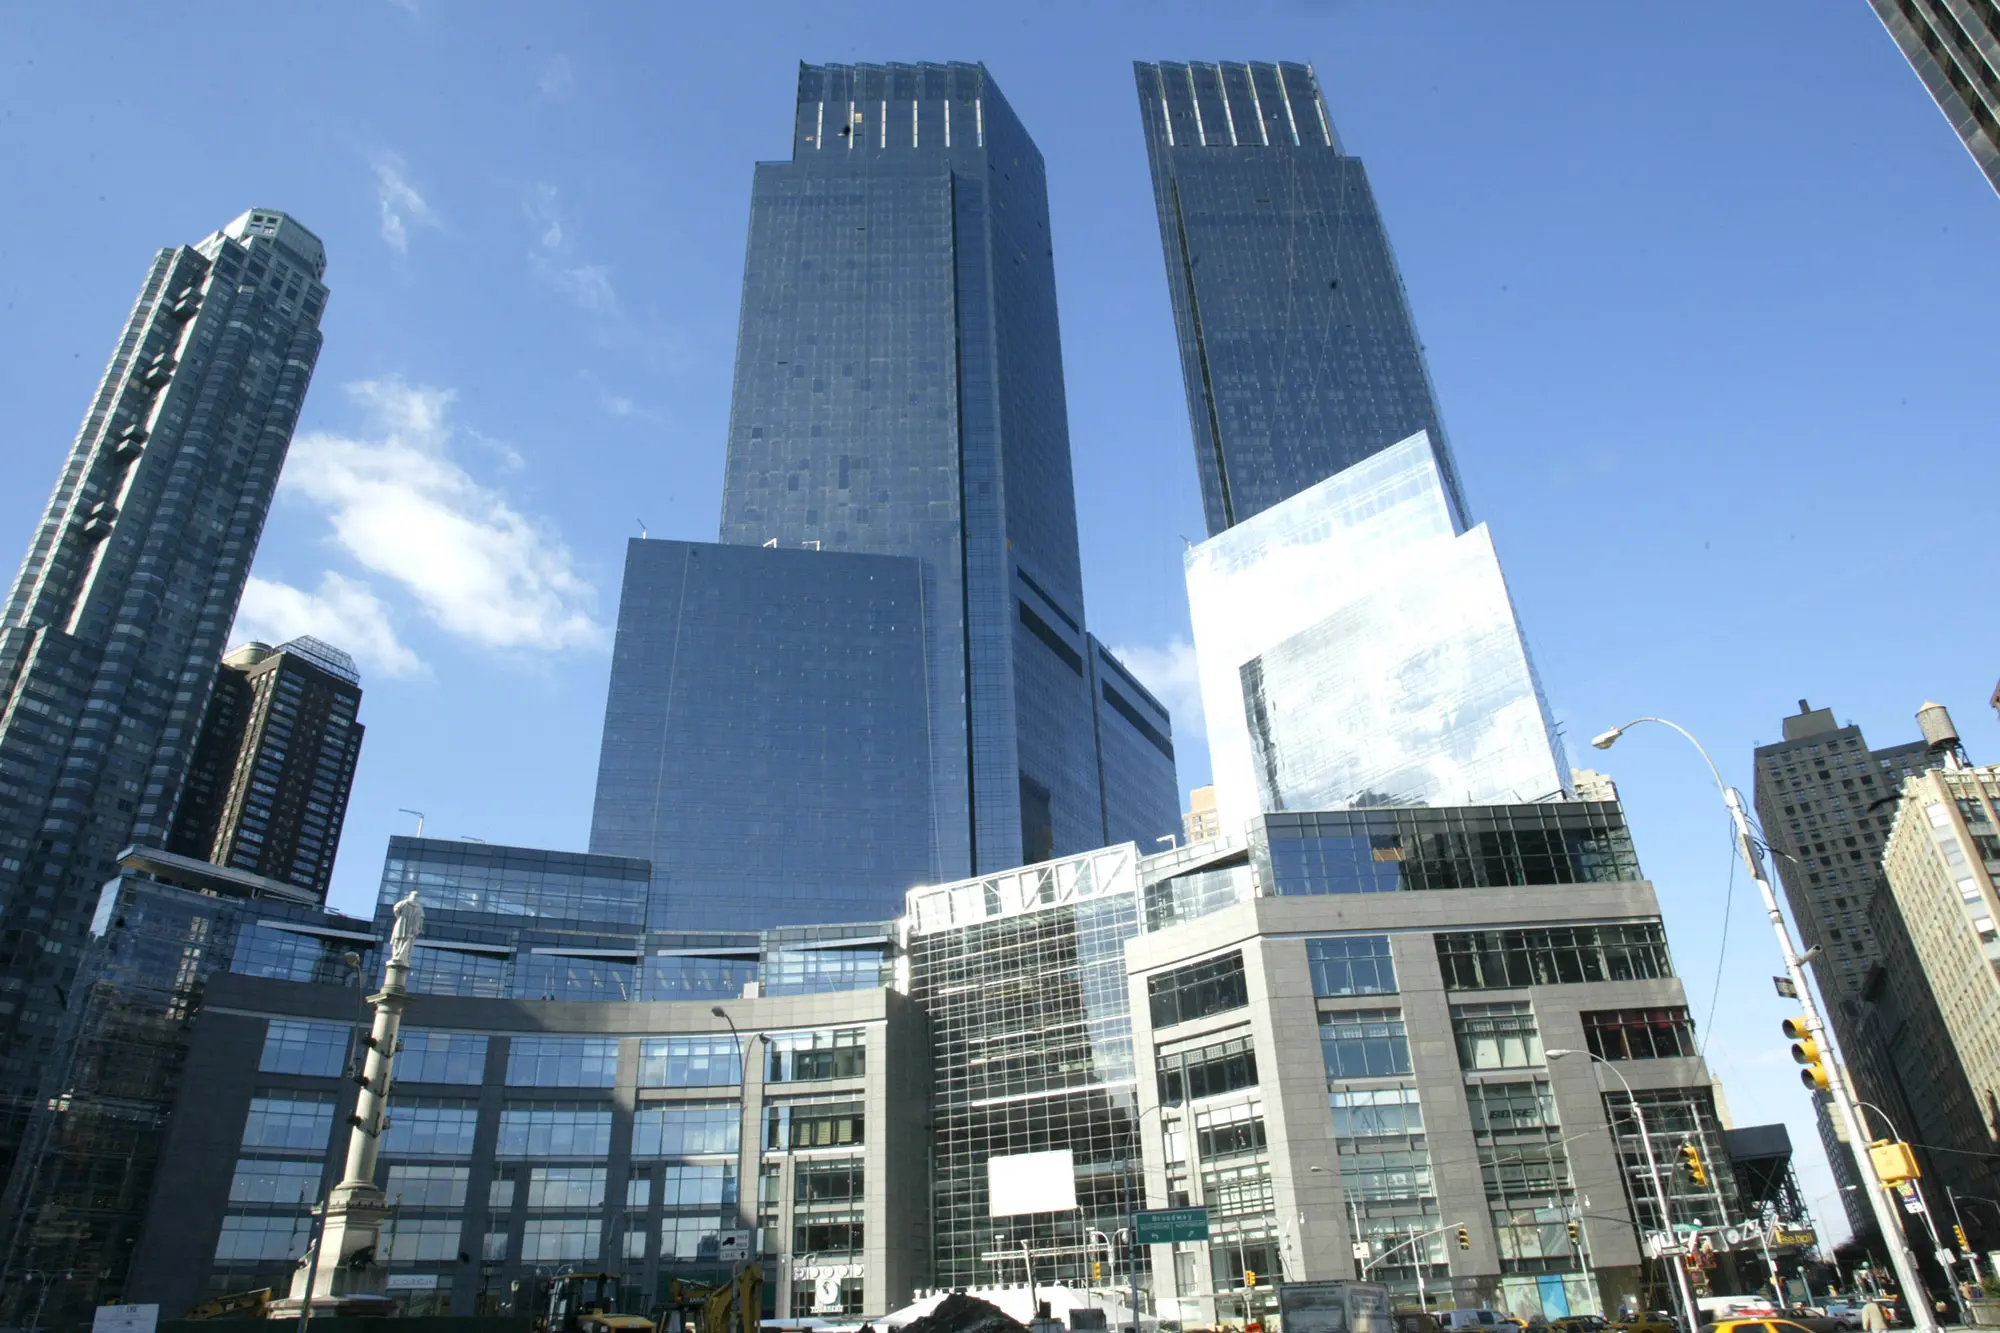 Mandarin Oriental Hotel suicide: Man in p.j's jumps to his death on top of Deutsche Bank Center tower. 